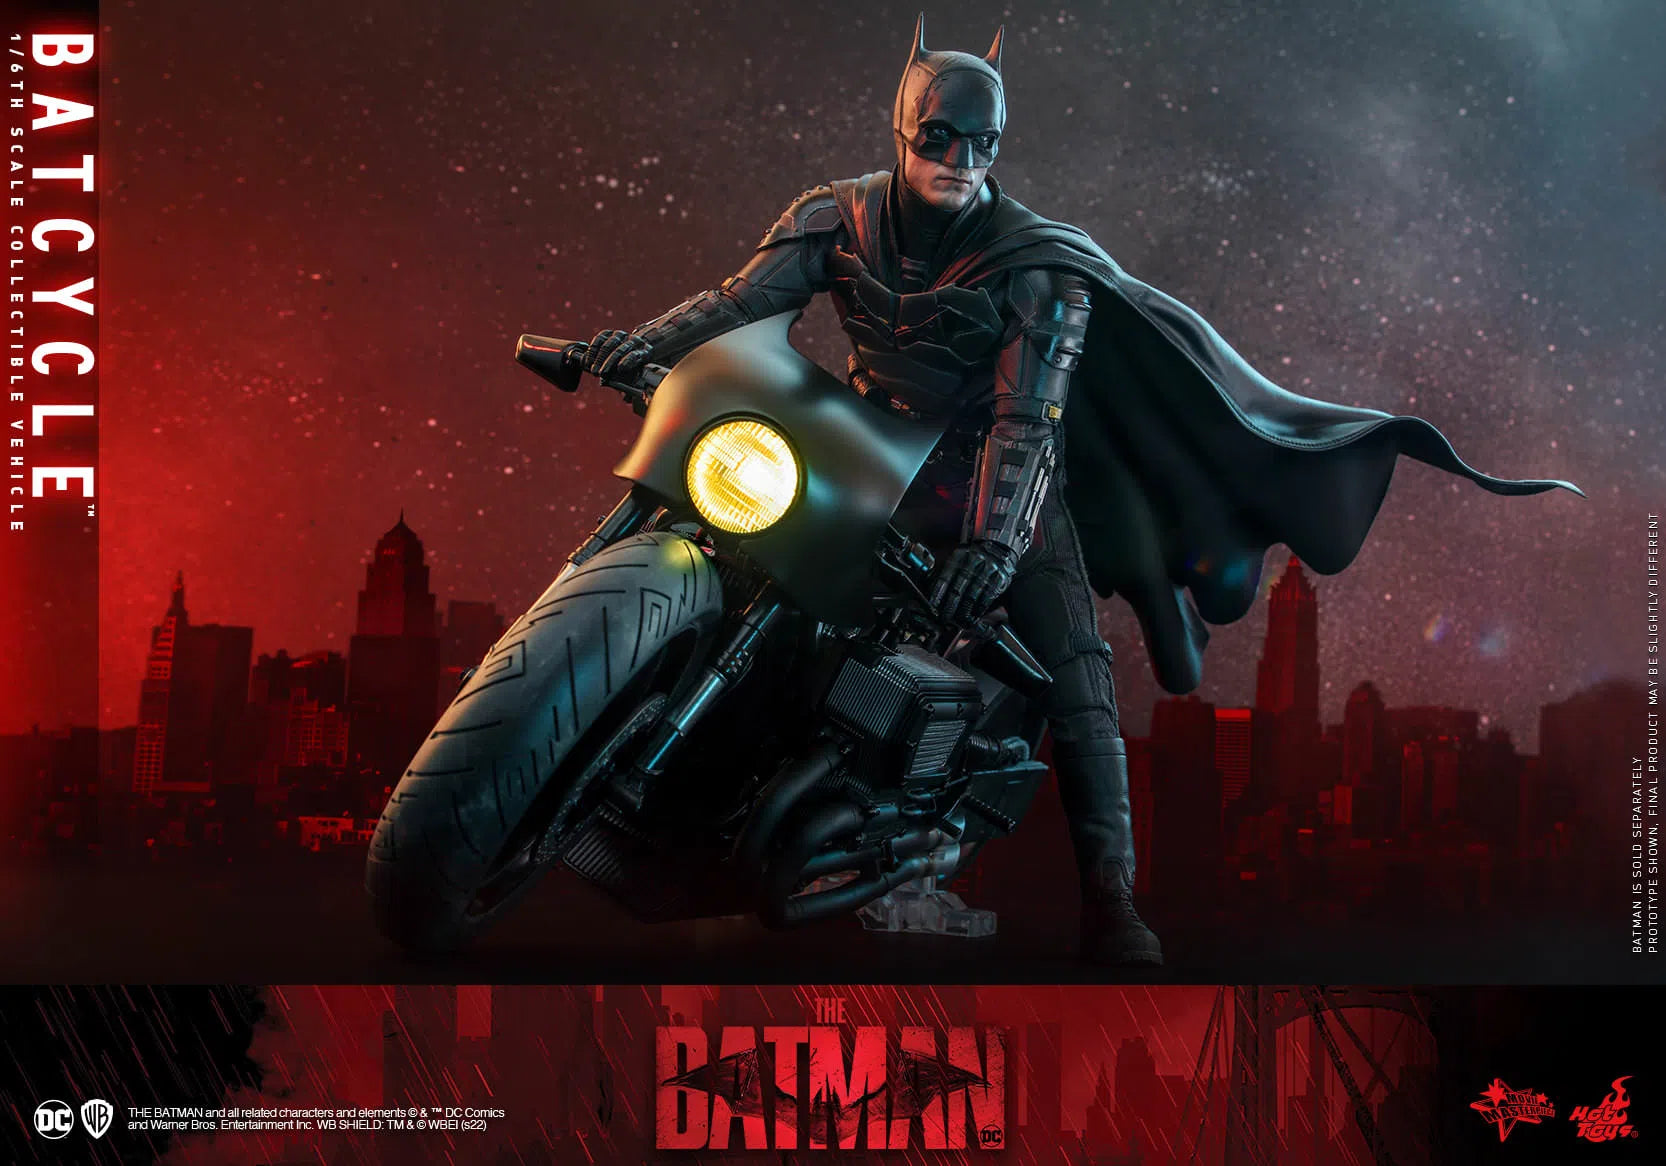 Batcycle: The Batman: DC Comics: MMS642: Hot Toys